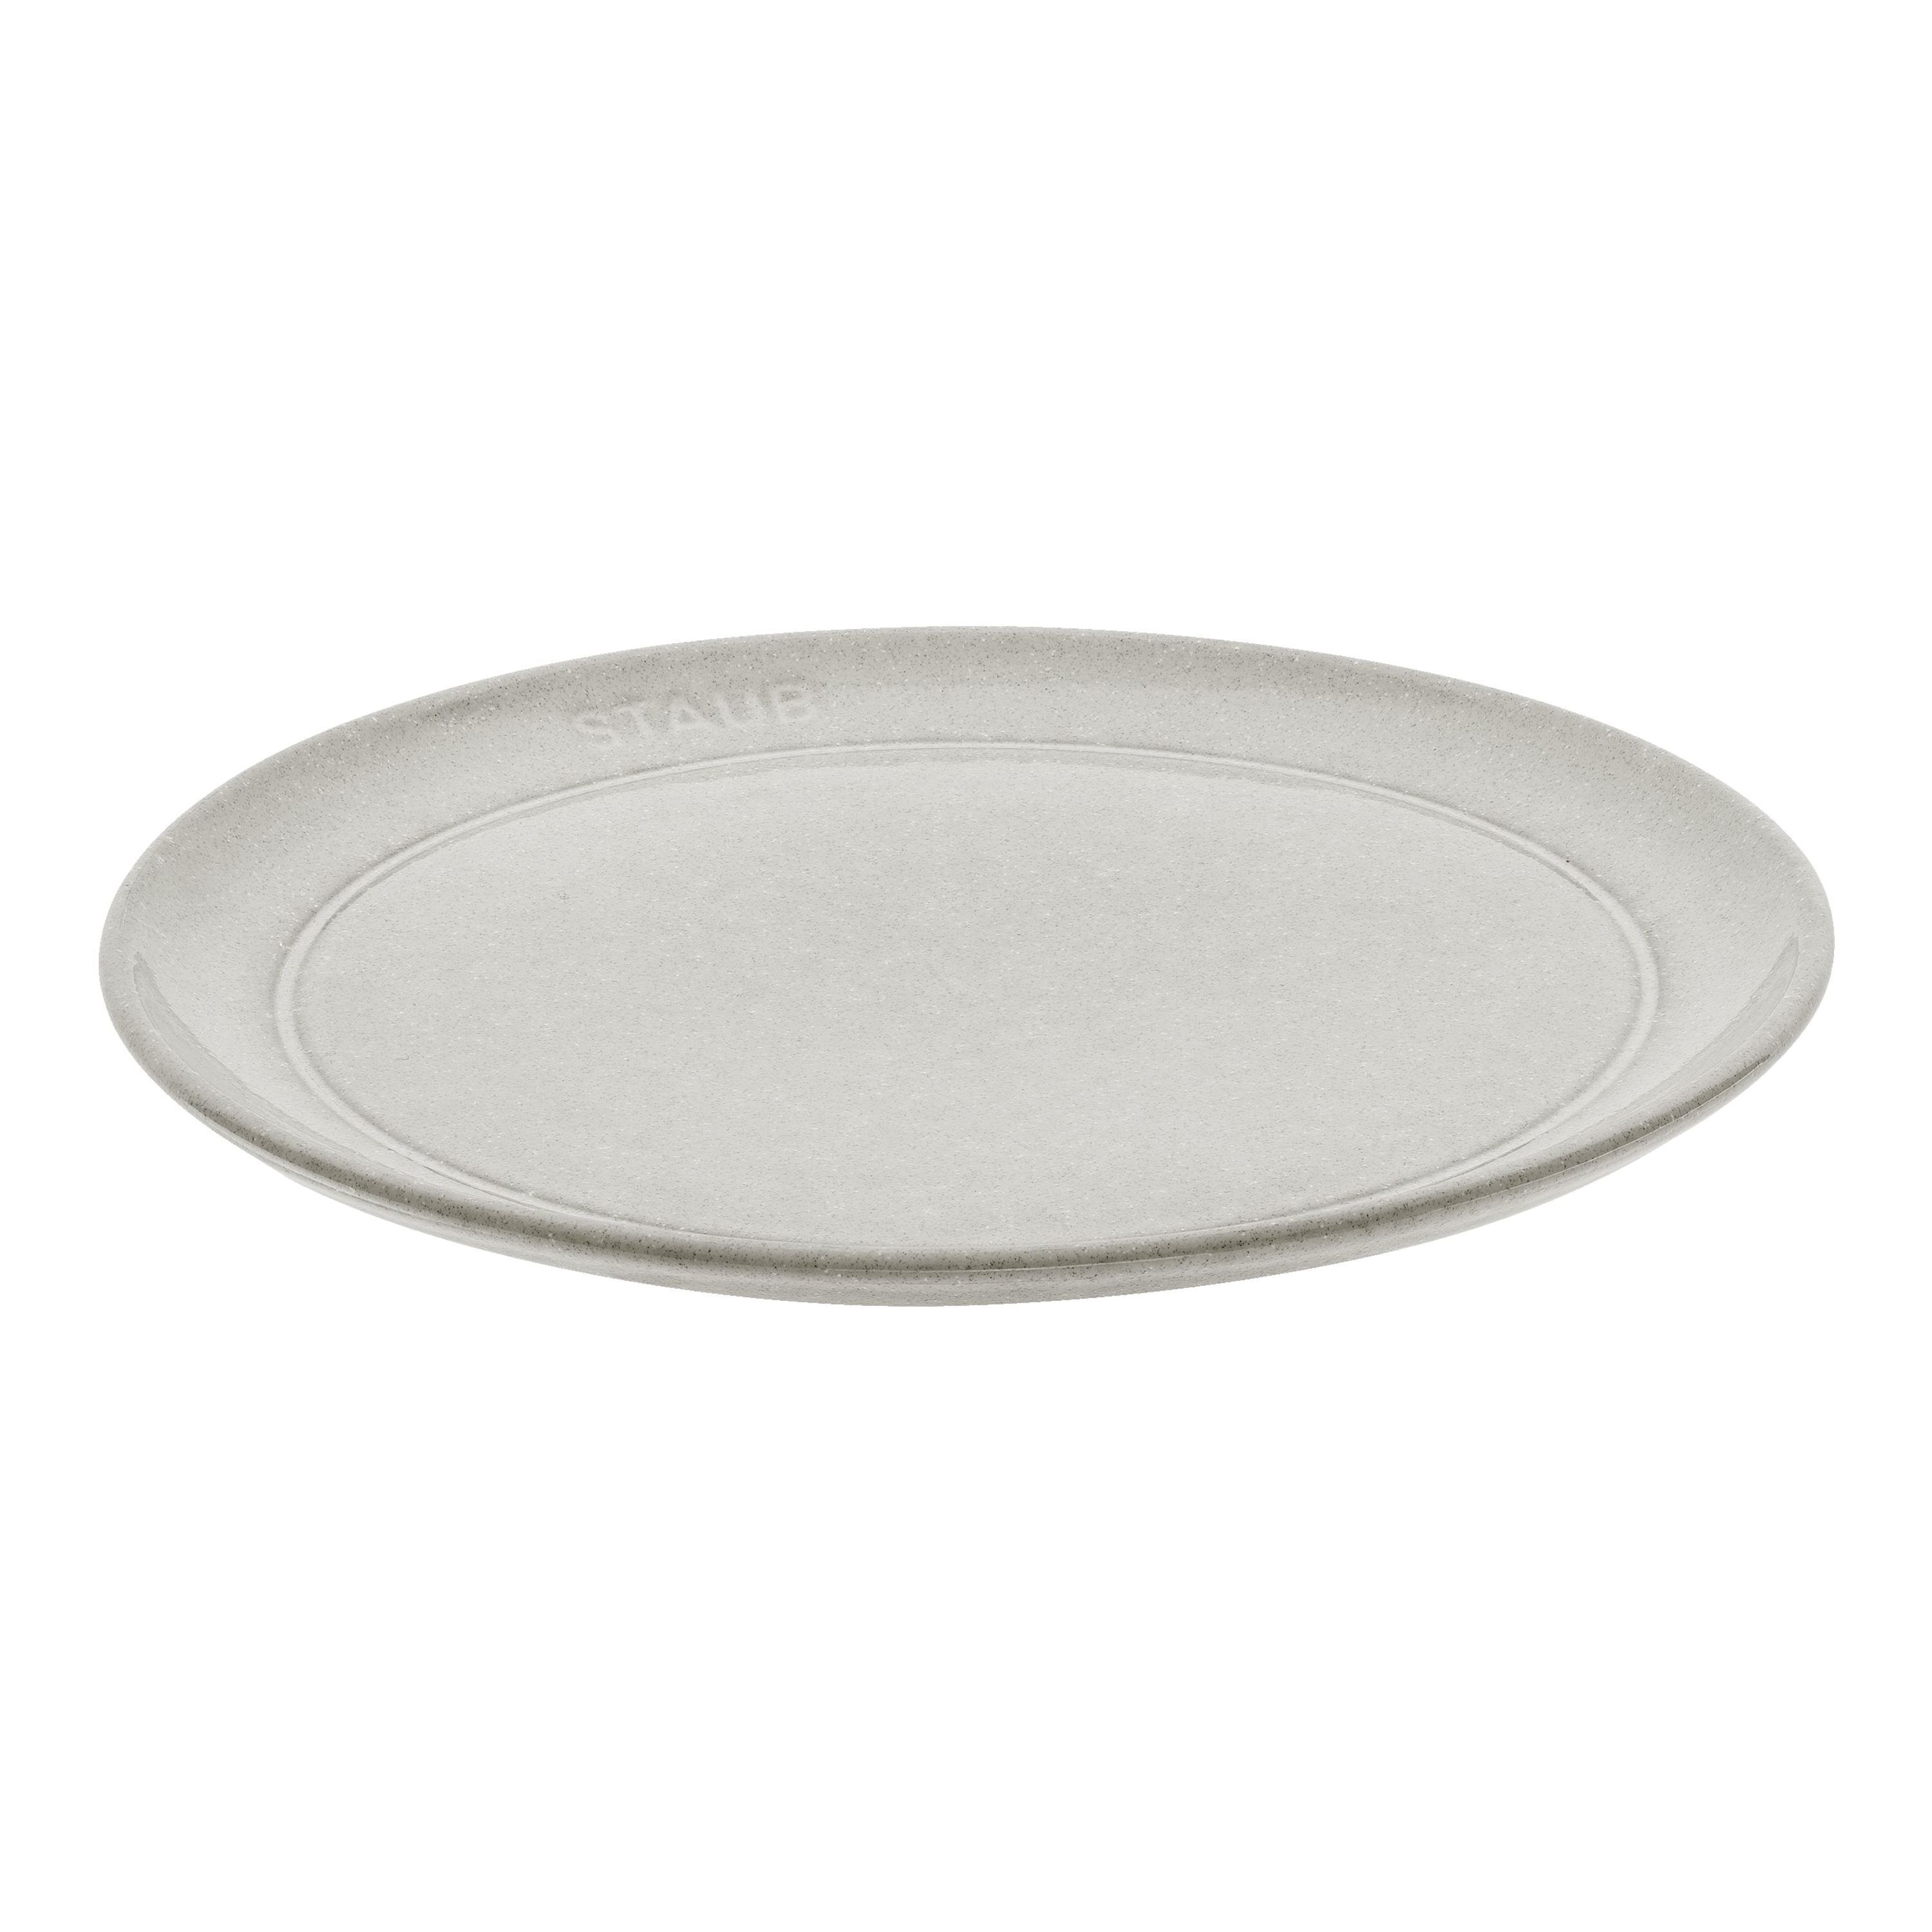 Staub Dining Line Piatto piano rotondo - 20 cm, tartufo bianco